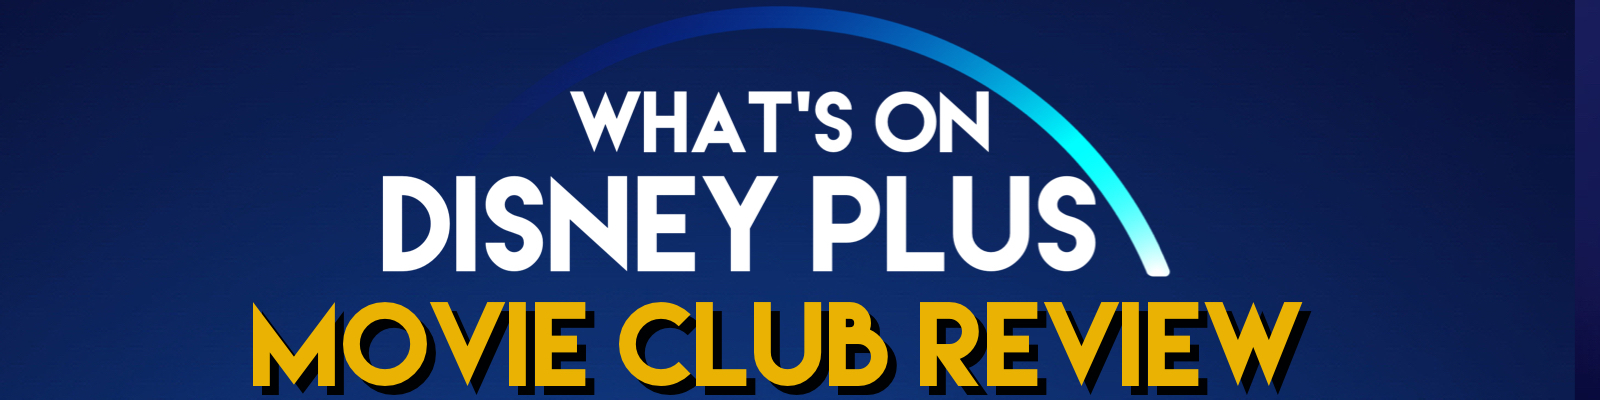 What’s On Disney Plus Movie Club Review